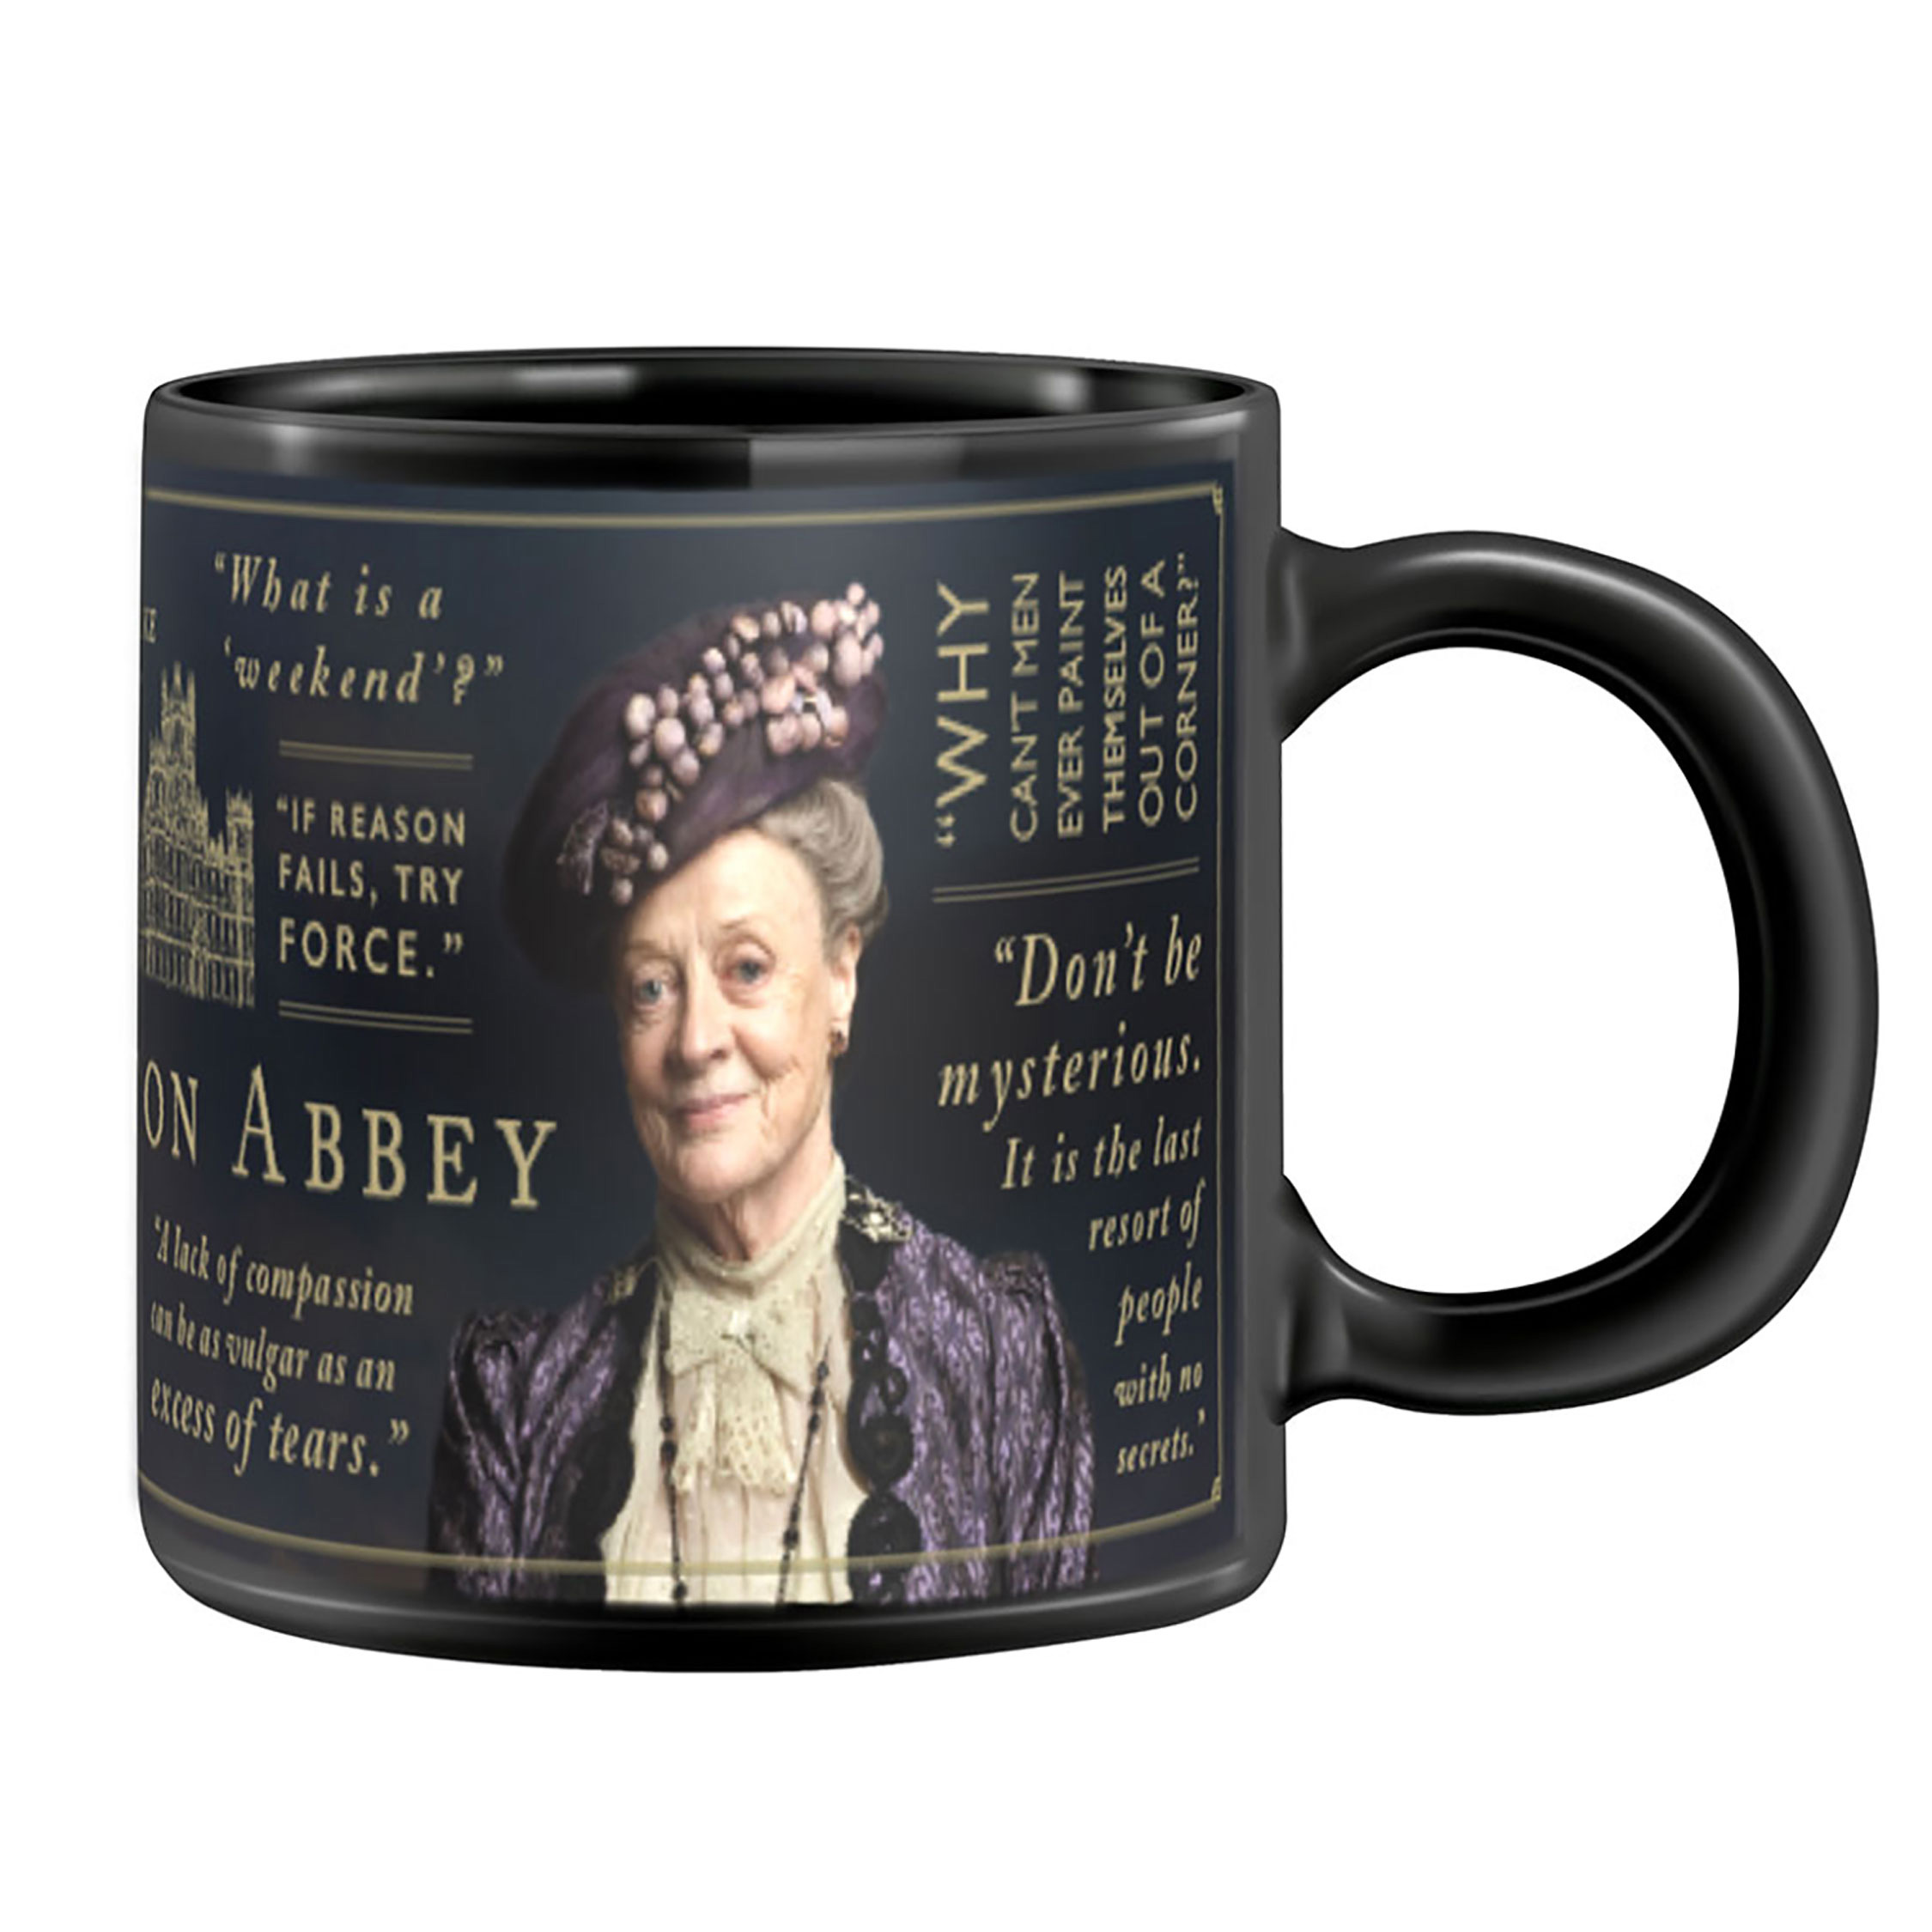 Downton Abbey Lady Violet Wit & Wisdom Heat-Changing Mug | Shop.PBS.org